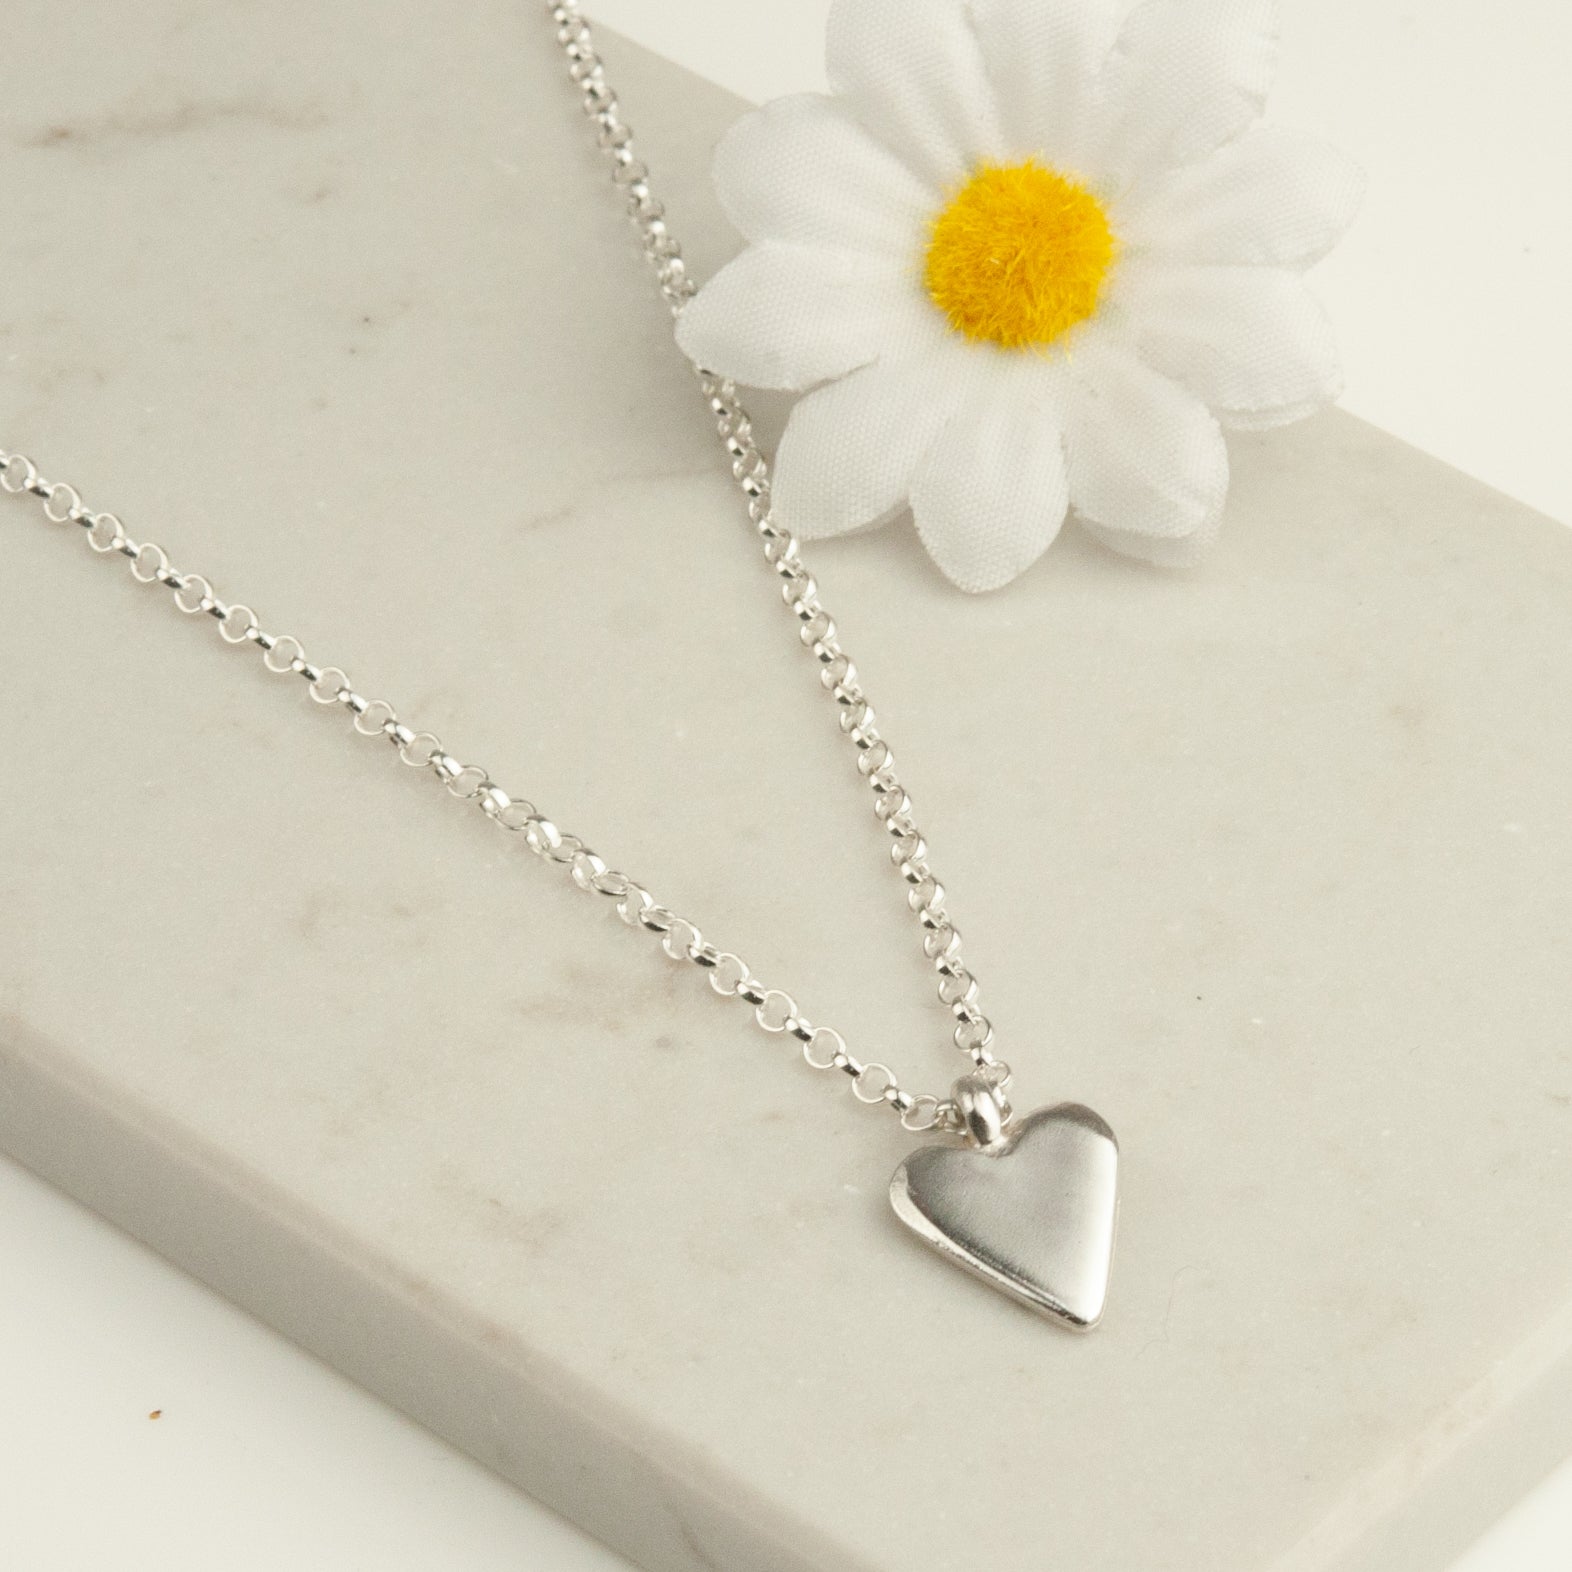 Belle & Bee sterling silver heart necklace